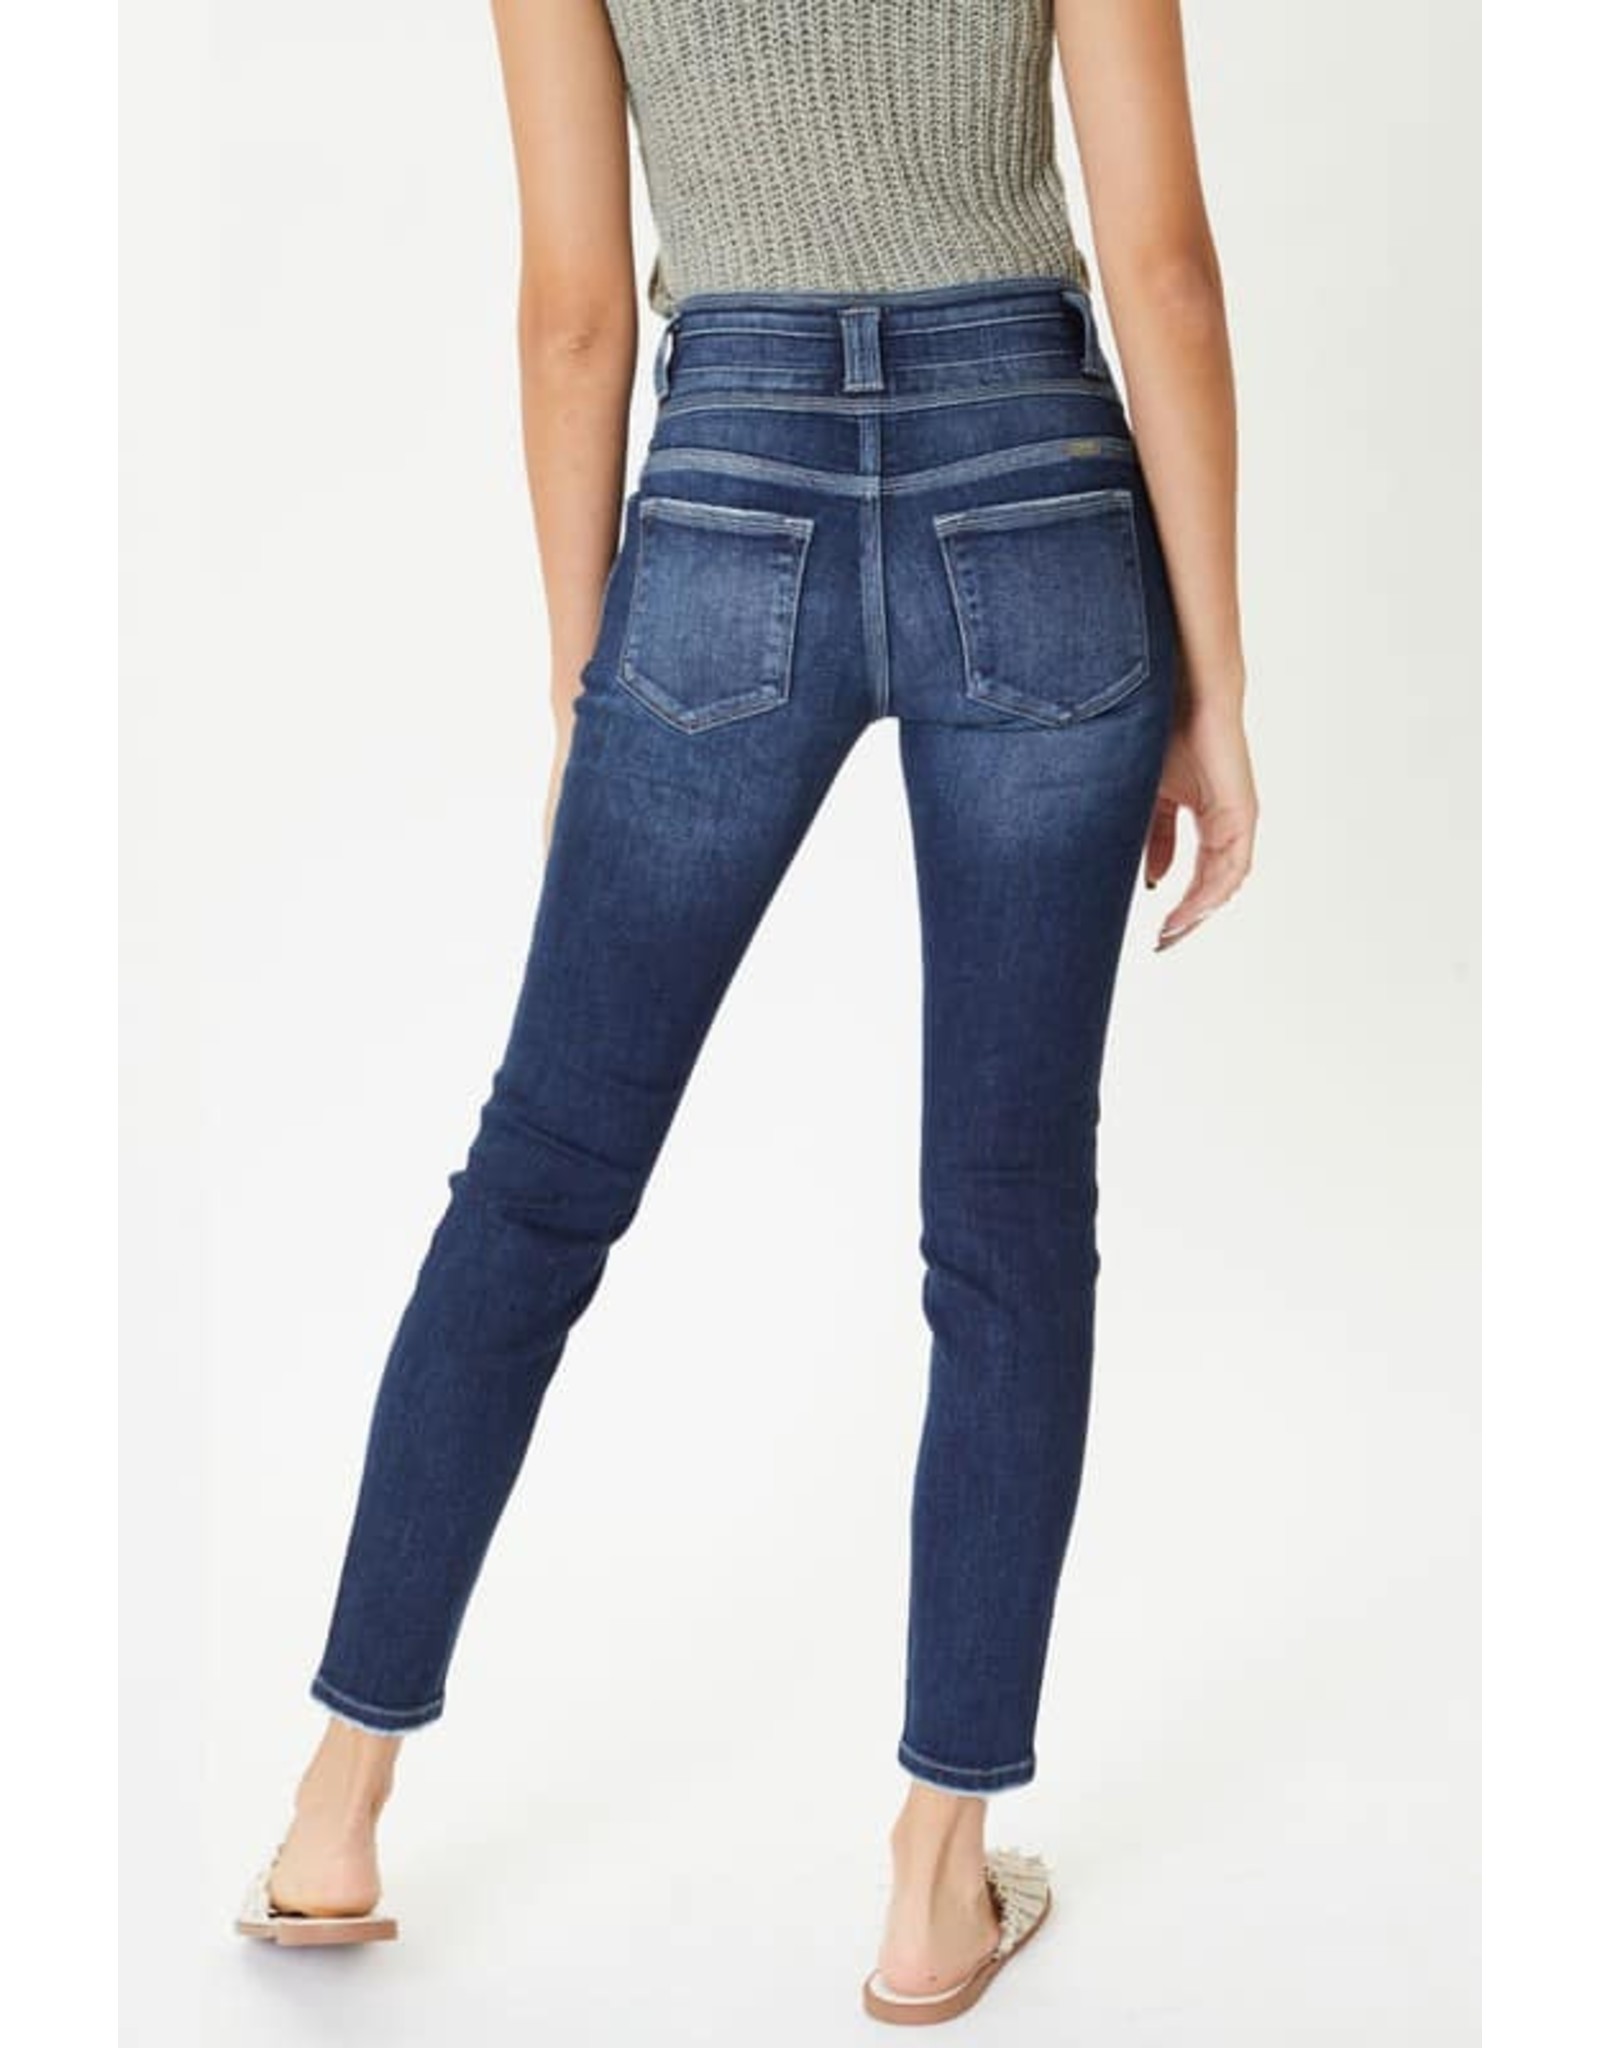 Alexandria KanCan Jeans